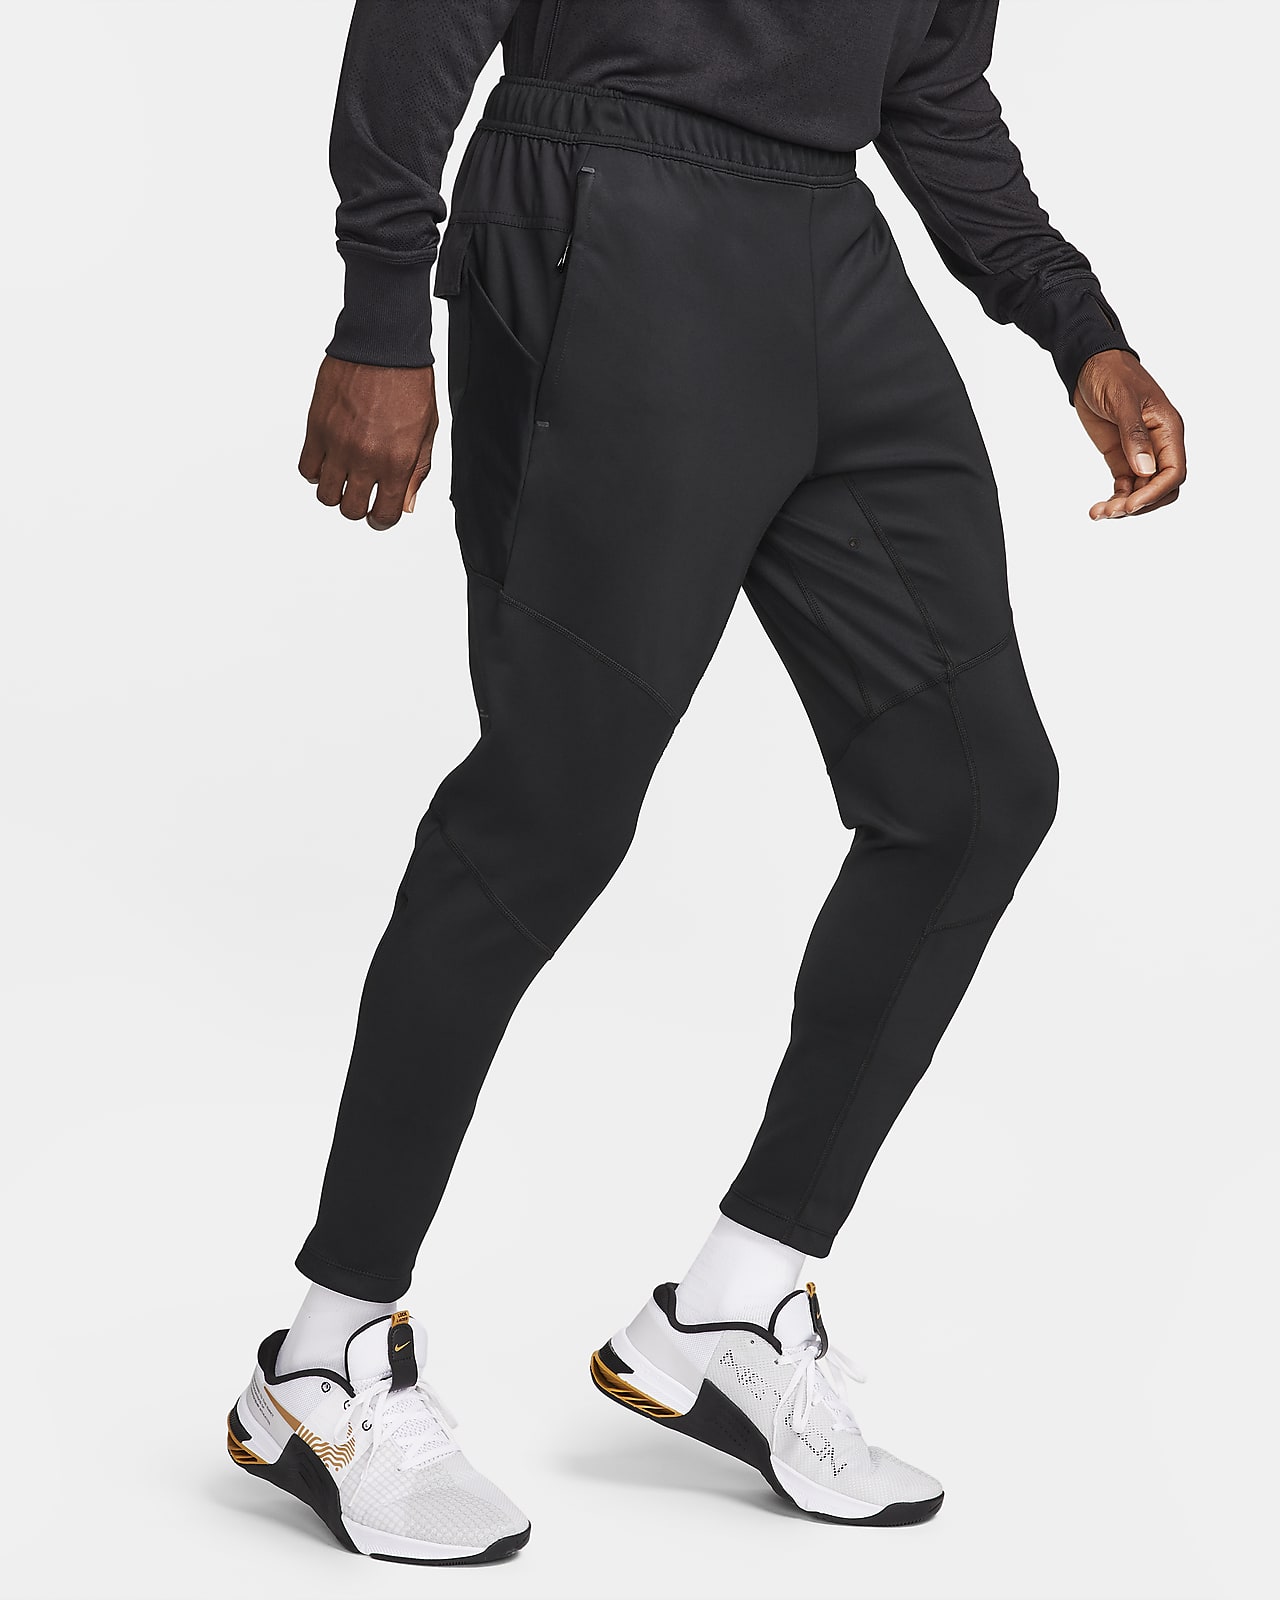 Nike | Pants | Nike Mens Utility Running Pants Black Size Large | Poshmark